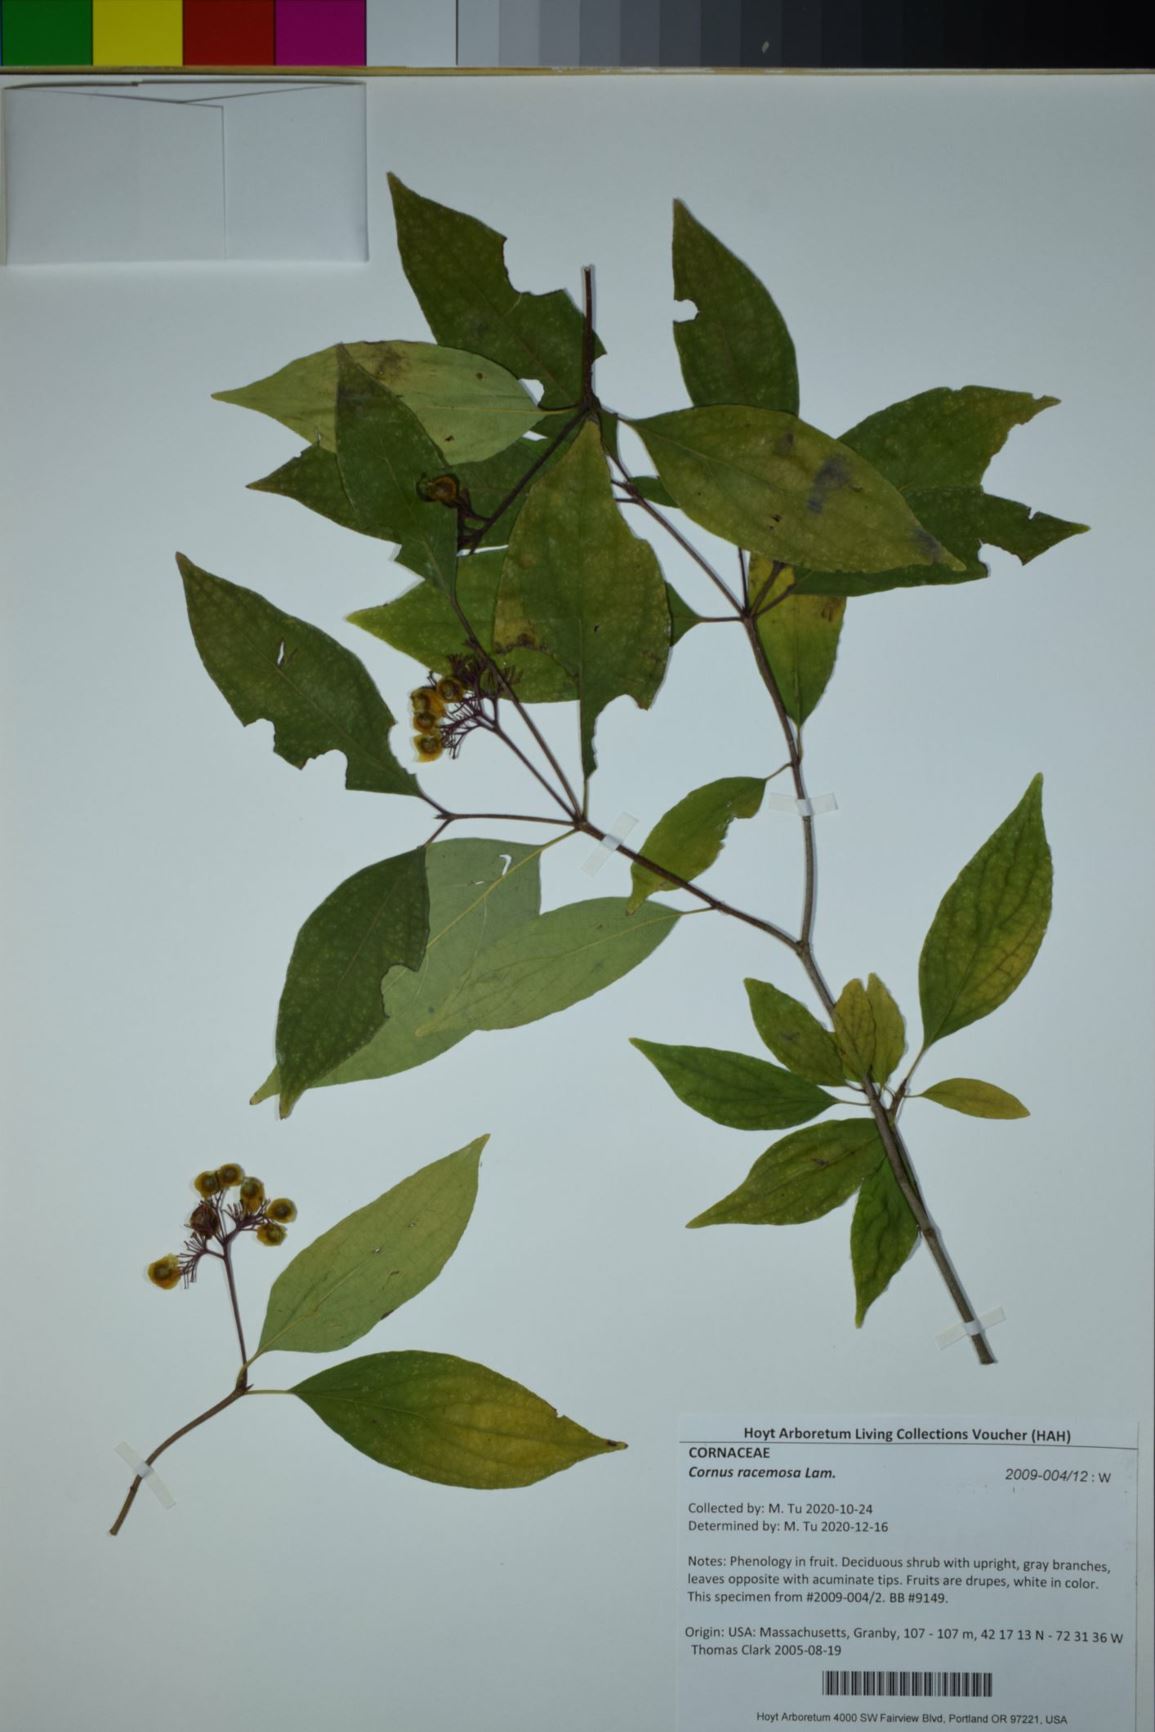 Cornus racemosa - gray dogwood, panicled dogwood